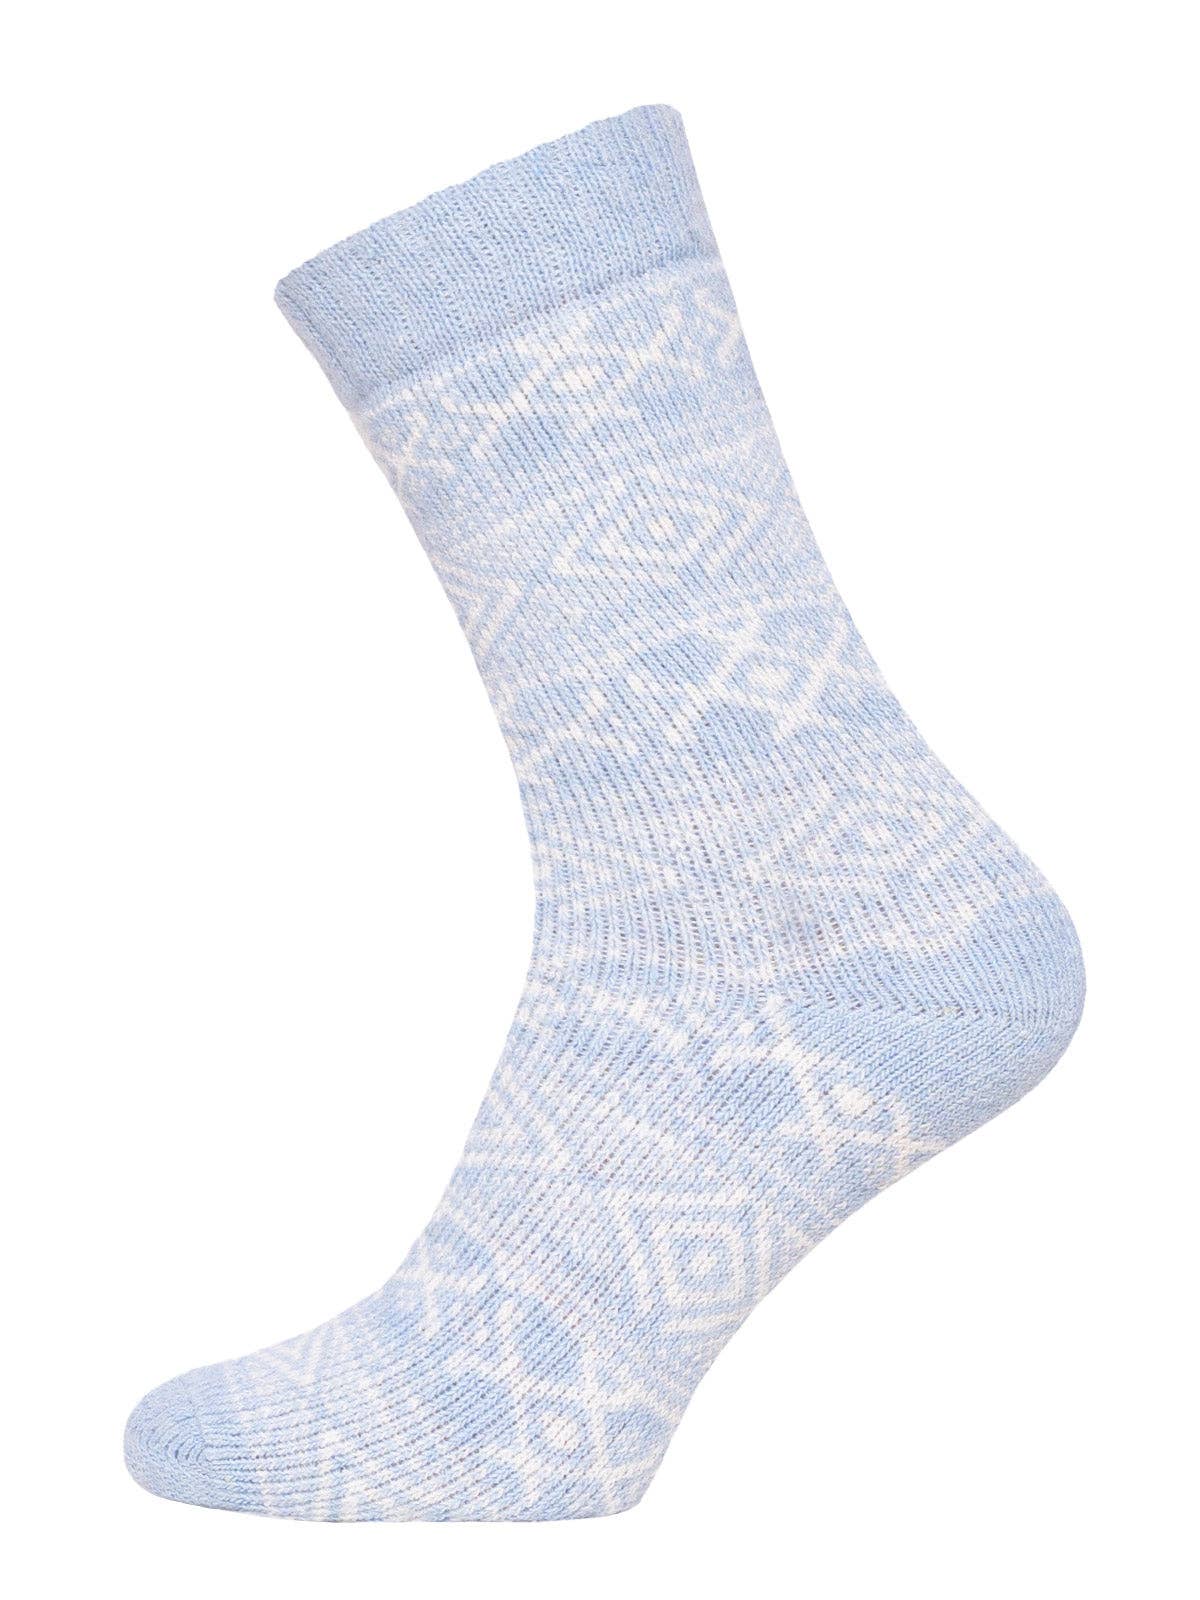 Socks: Norwegian Light Blue socks classic 45% wool content